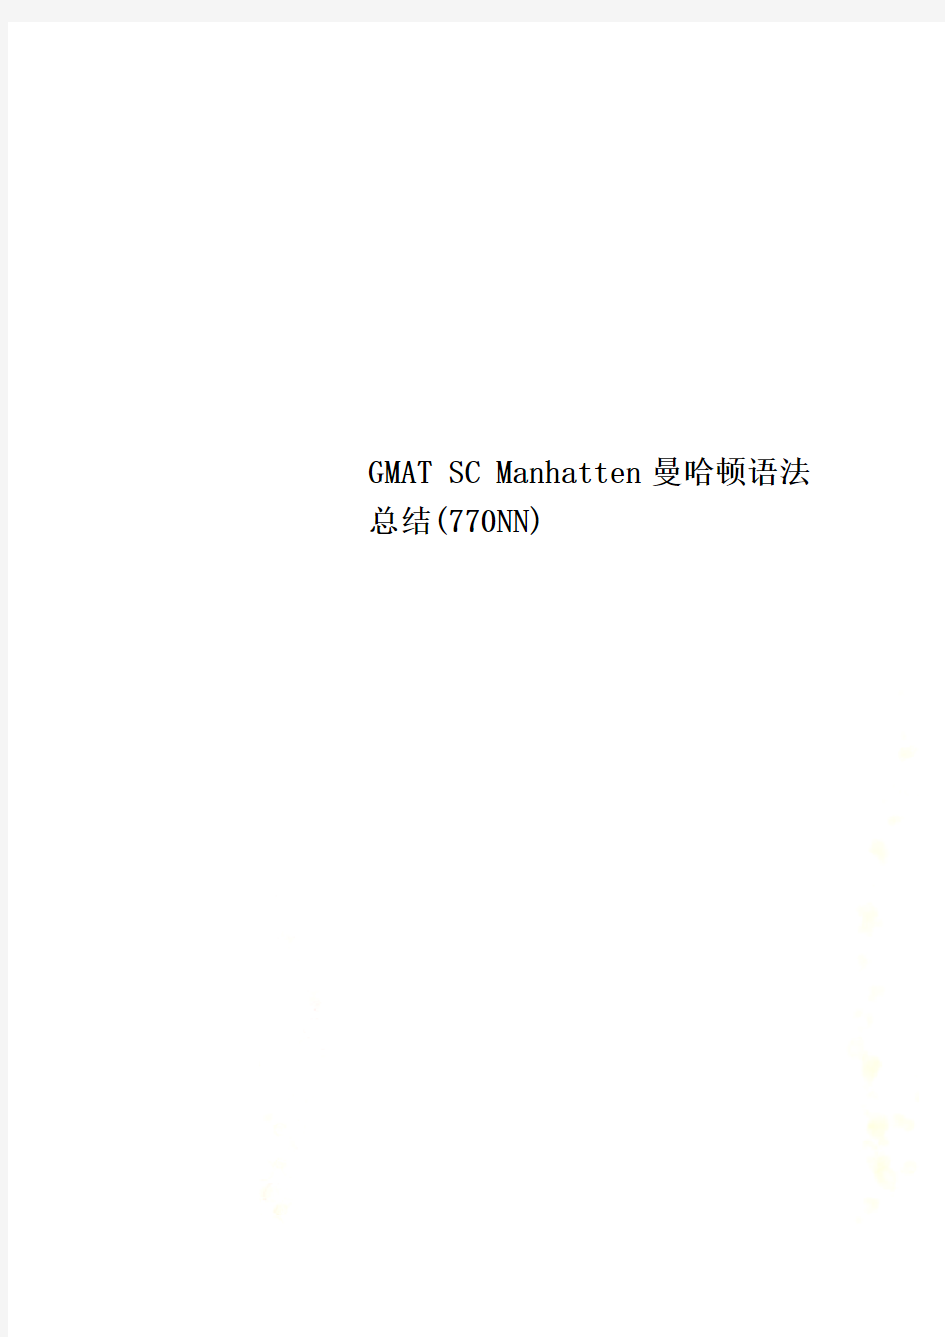 GMAT SC Manhatten曼哈顿语法总结(770NN)